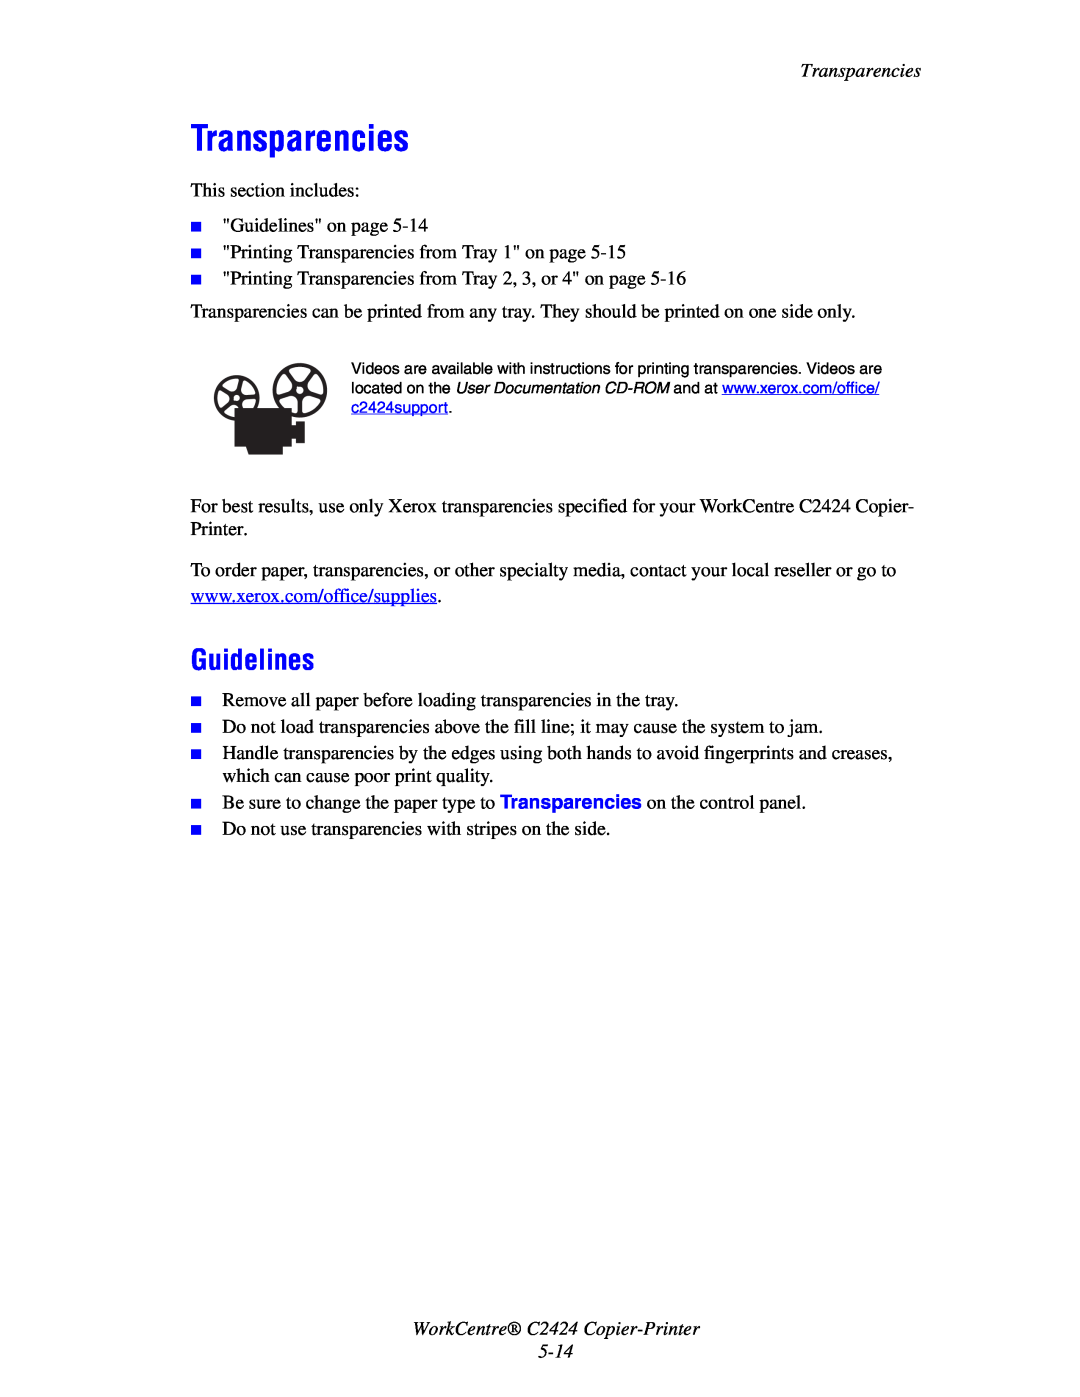 2Wire C424 manual Transparencies, WorkCentre C2424 Copier-Printer, Guidelines 